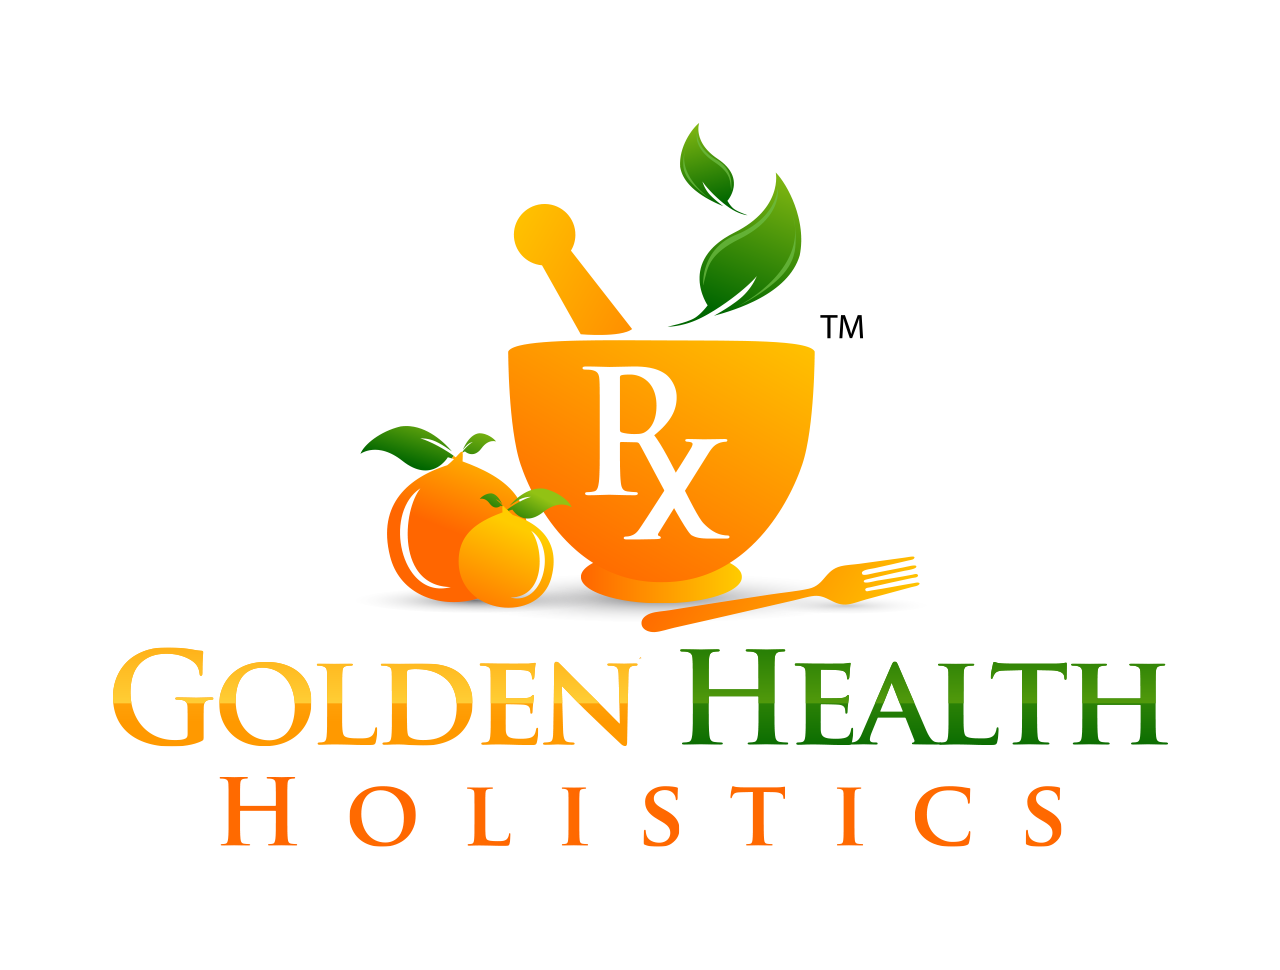 Golden Health Holistics